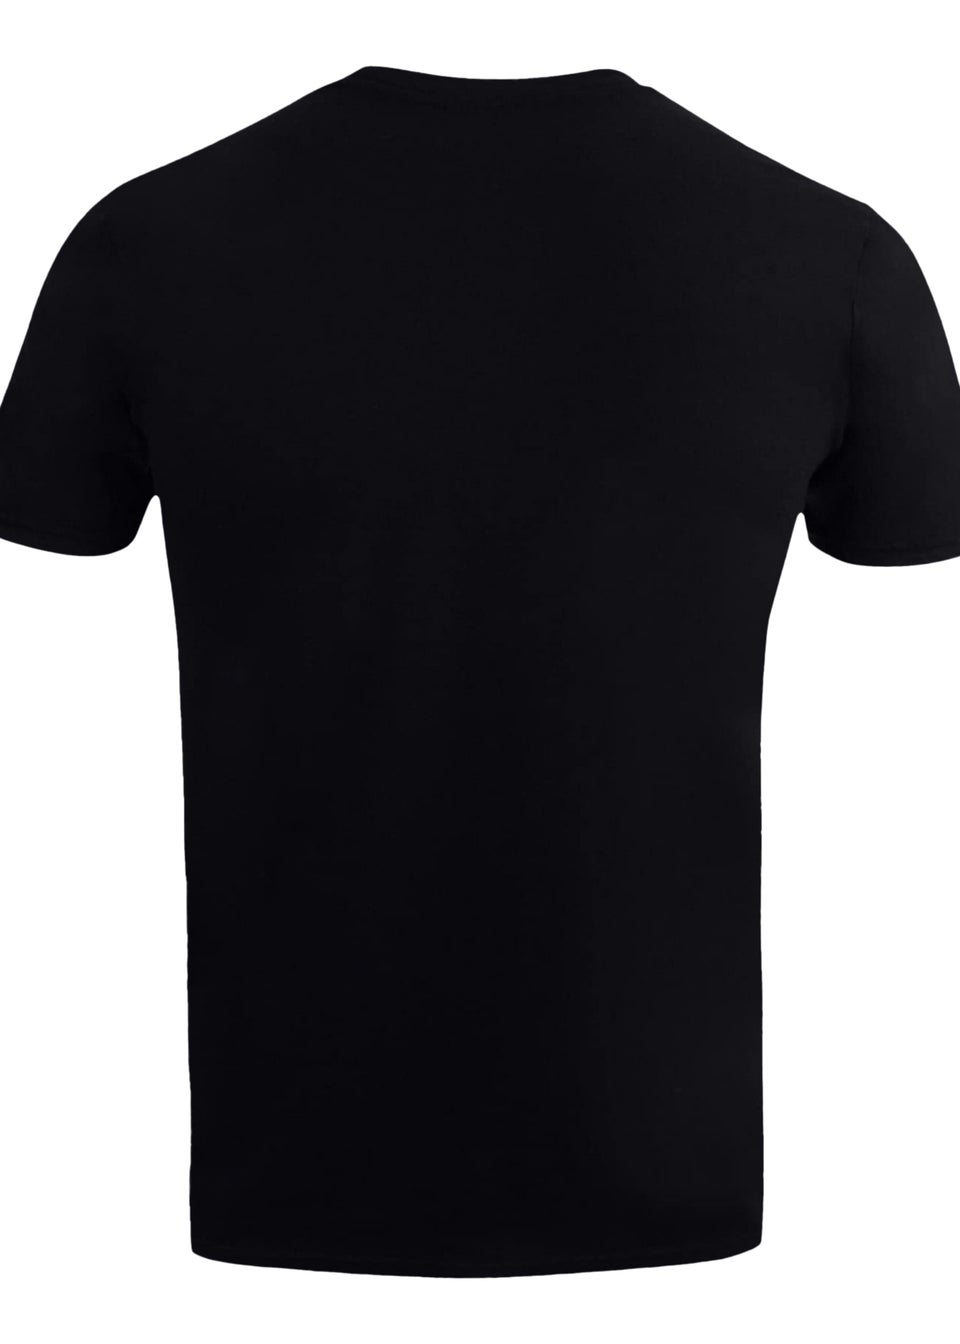 Star Wars Black Retro Logo Cotton T-Shirt